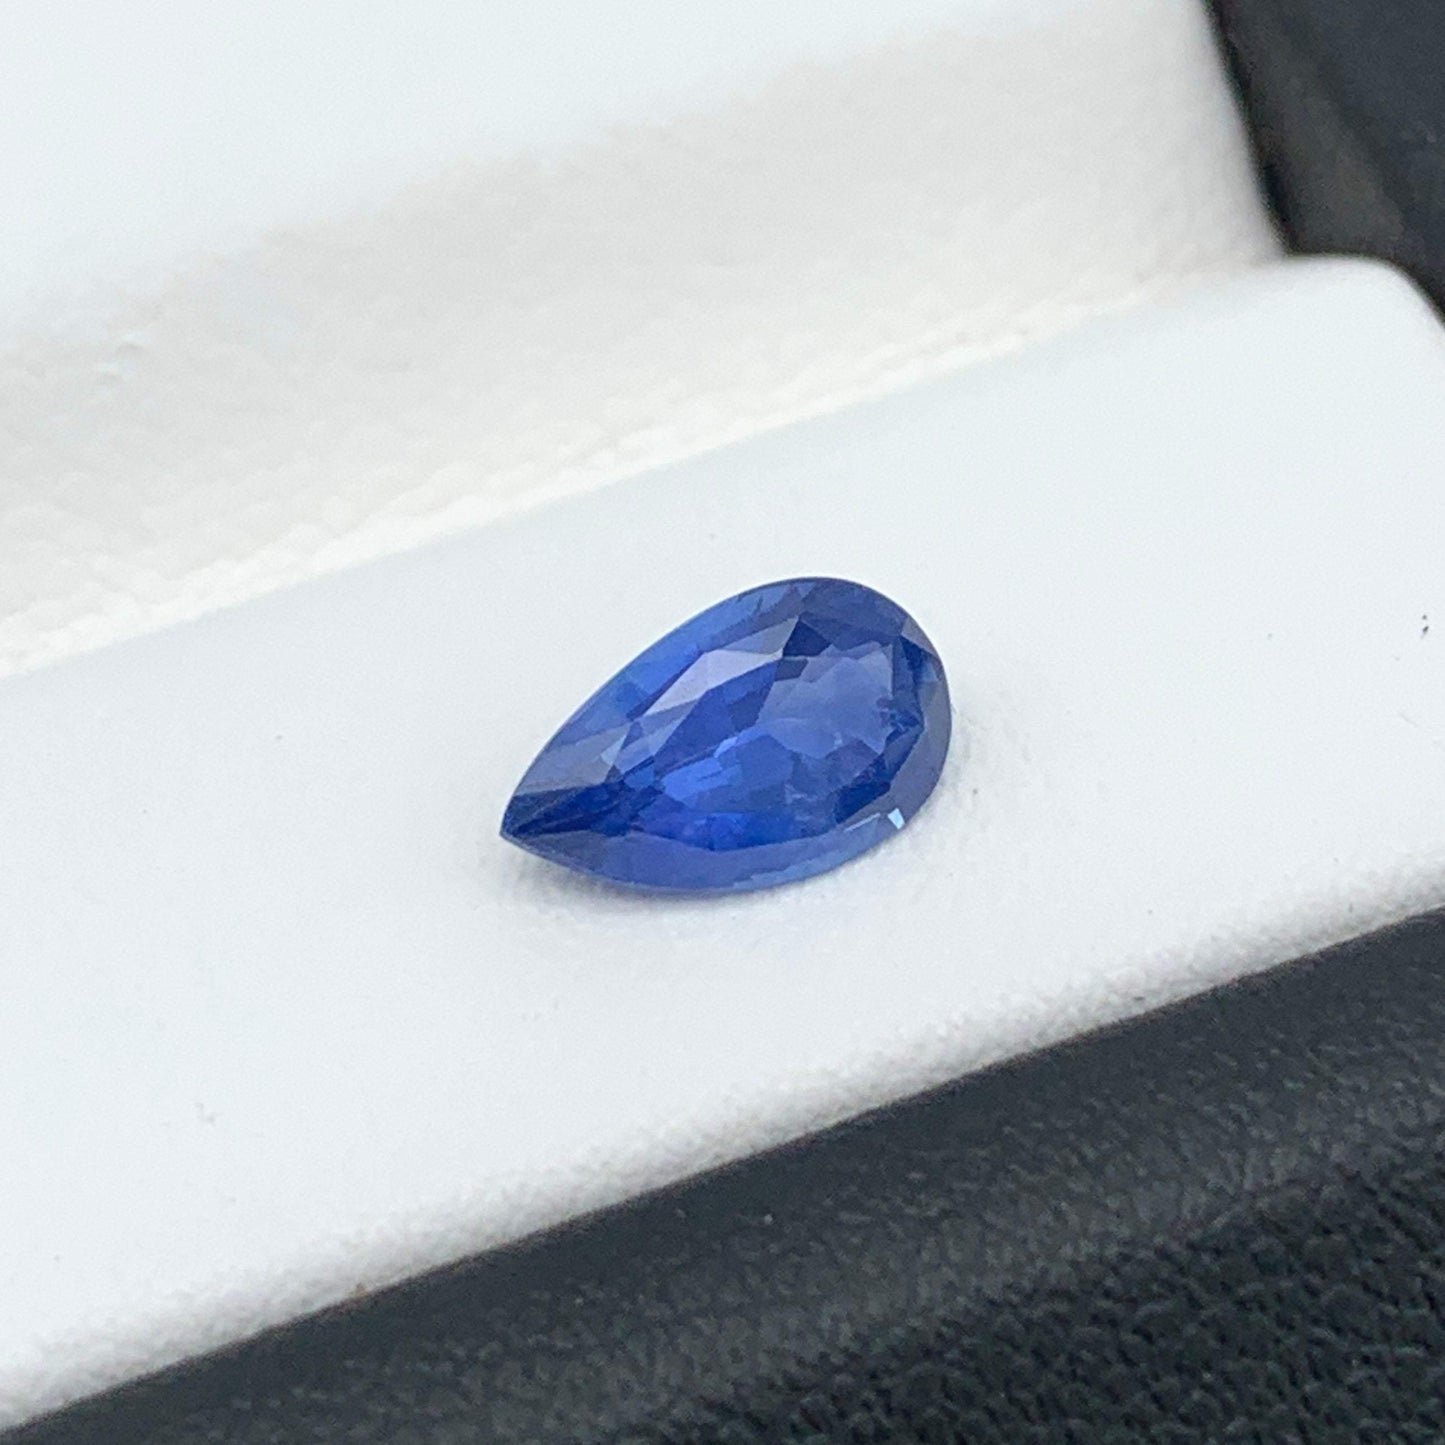 1.15CT Natural Blue Sapphire 